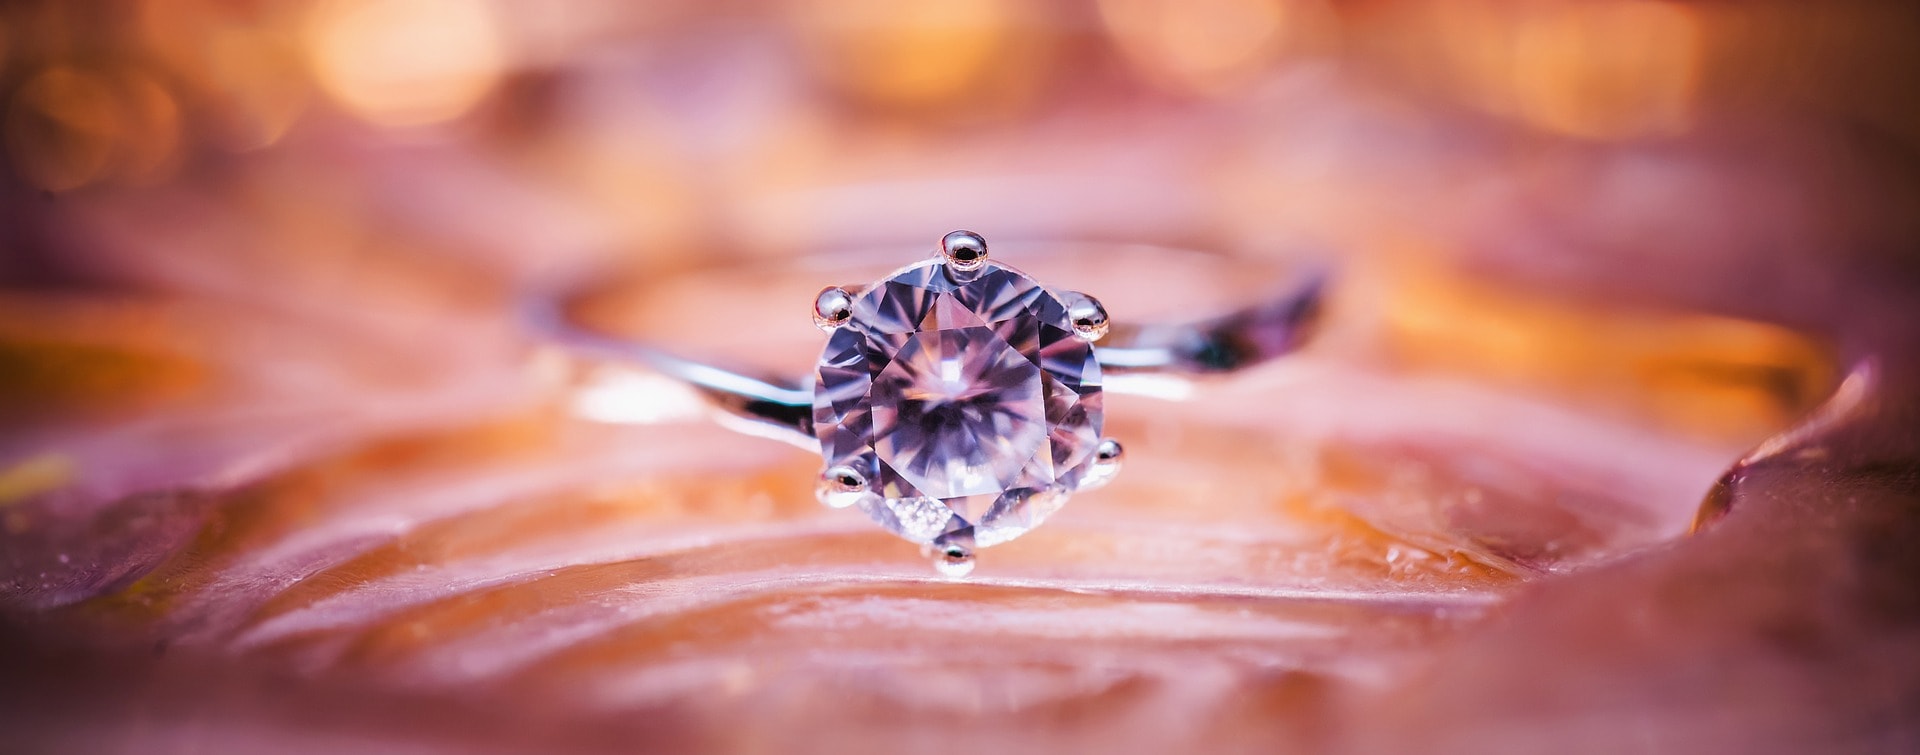 Diamond Fashion Jewellery: The Bling Factor